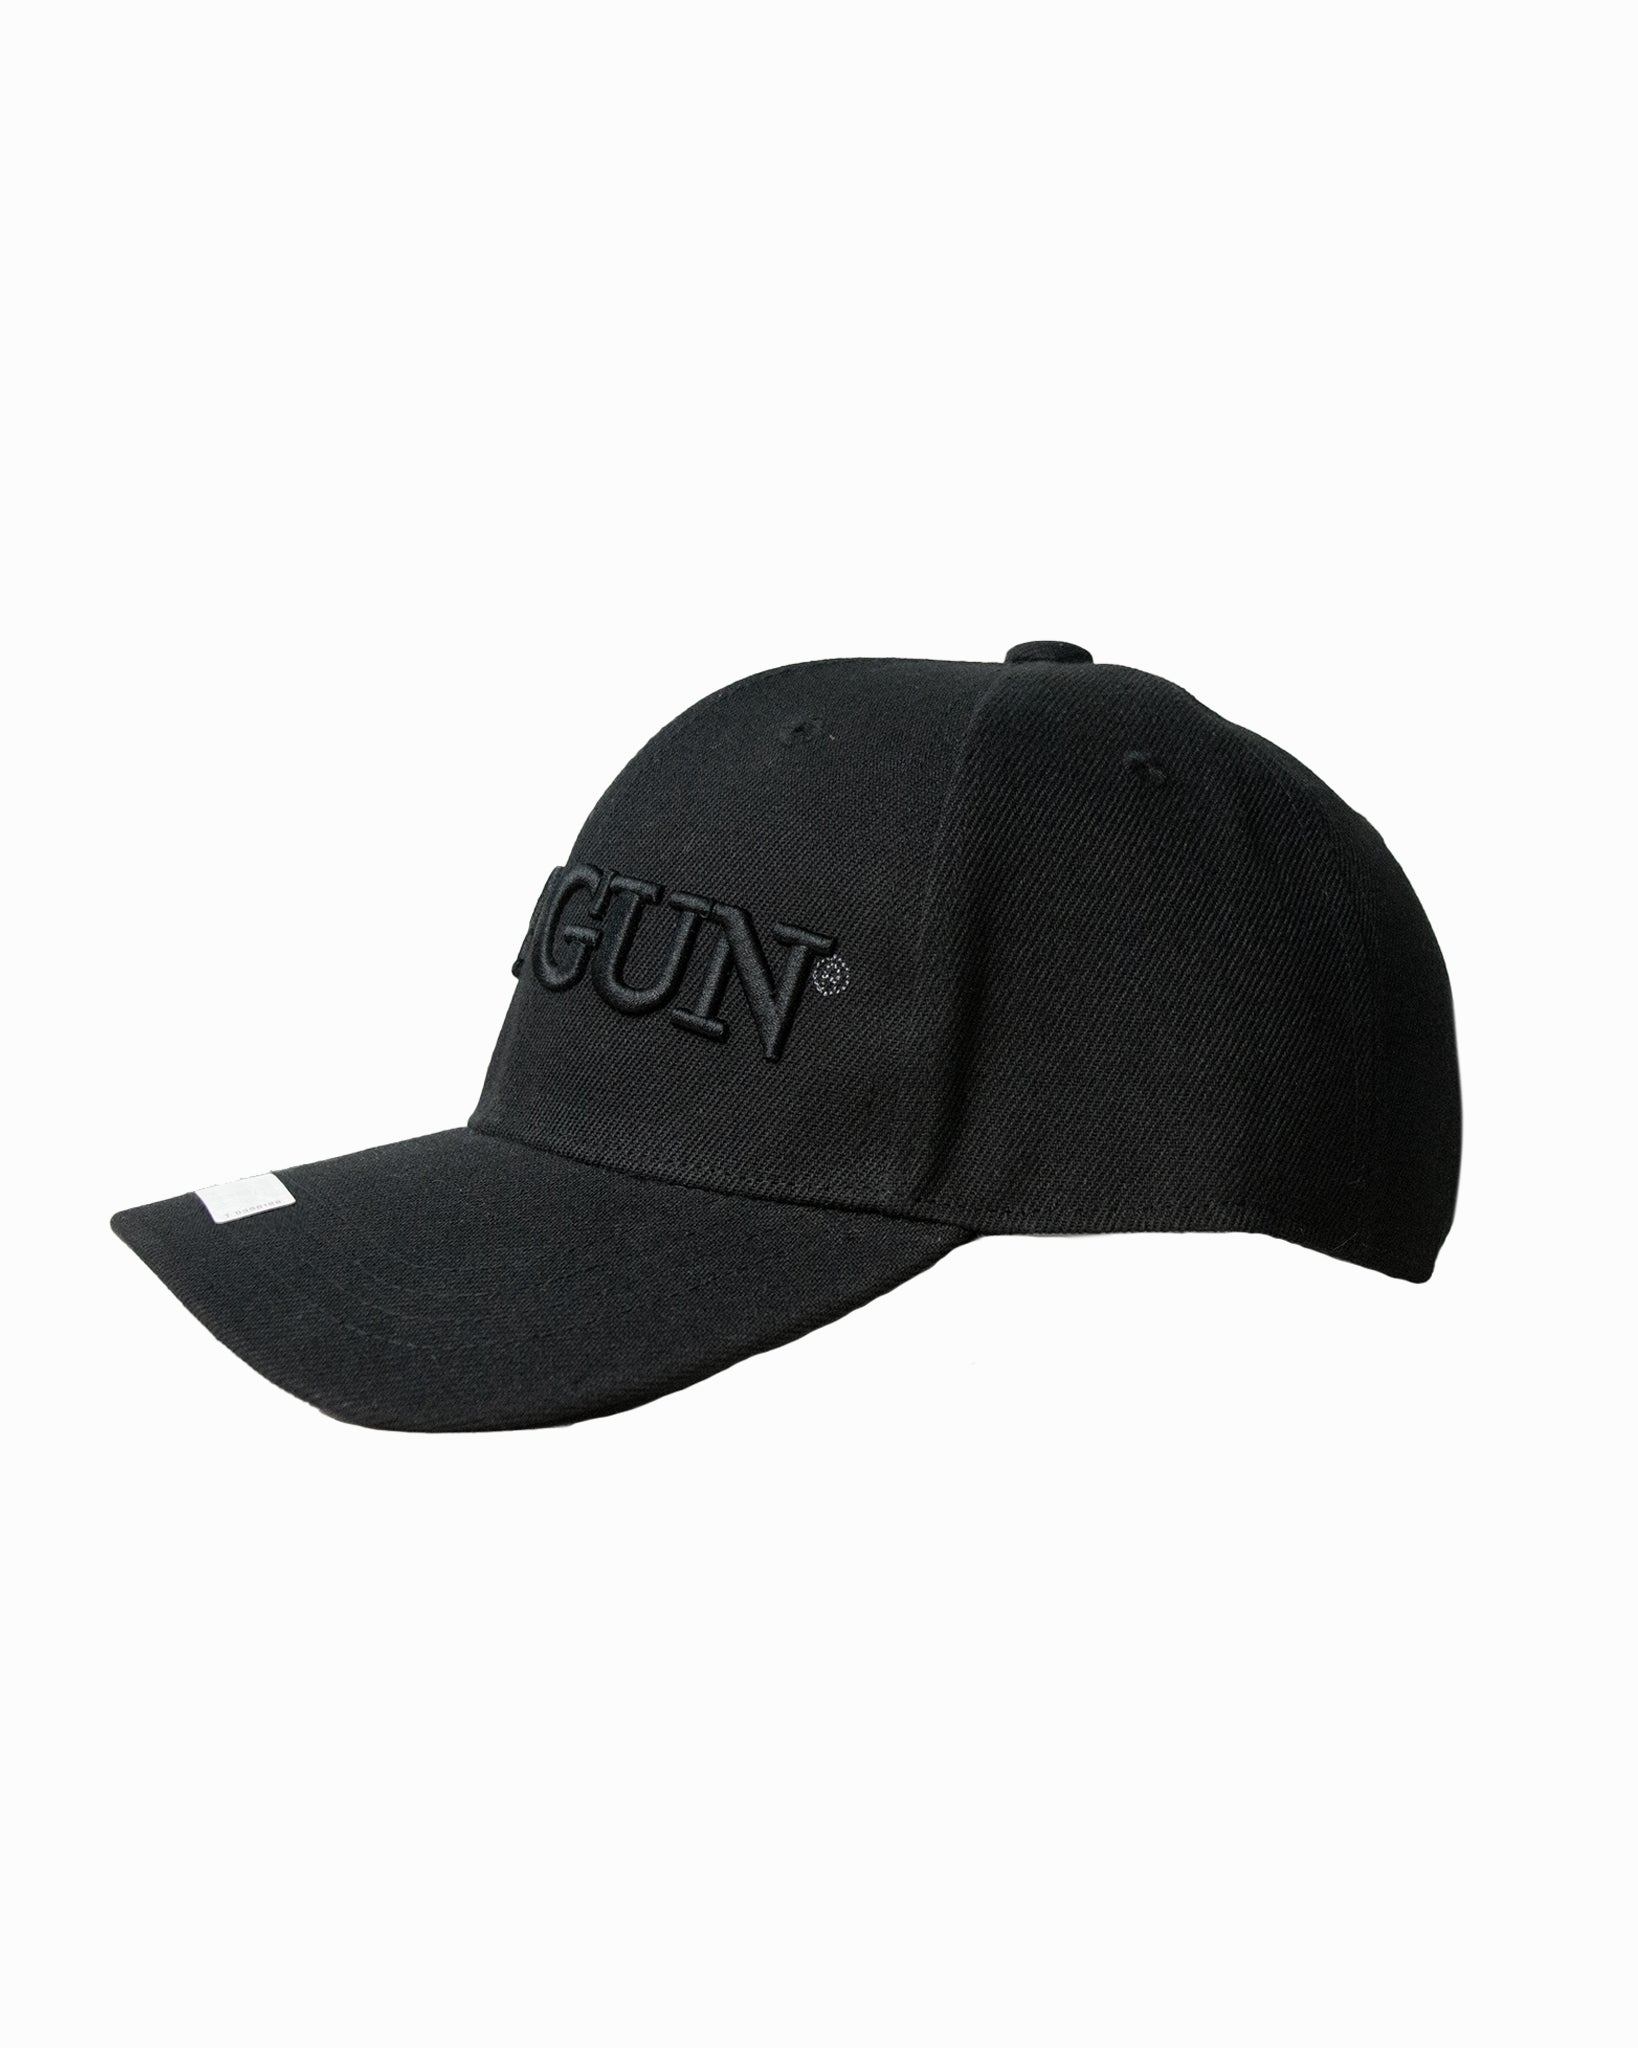 Top Gun: Maverick Gun and Trucker Cap, More Beanie, Store | | Caps – Store Hat, Official Top